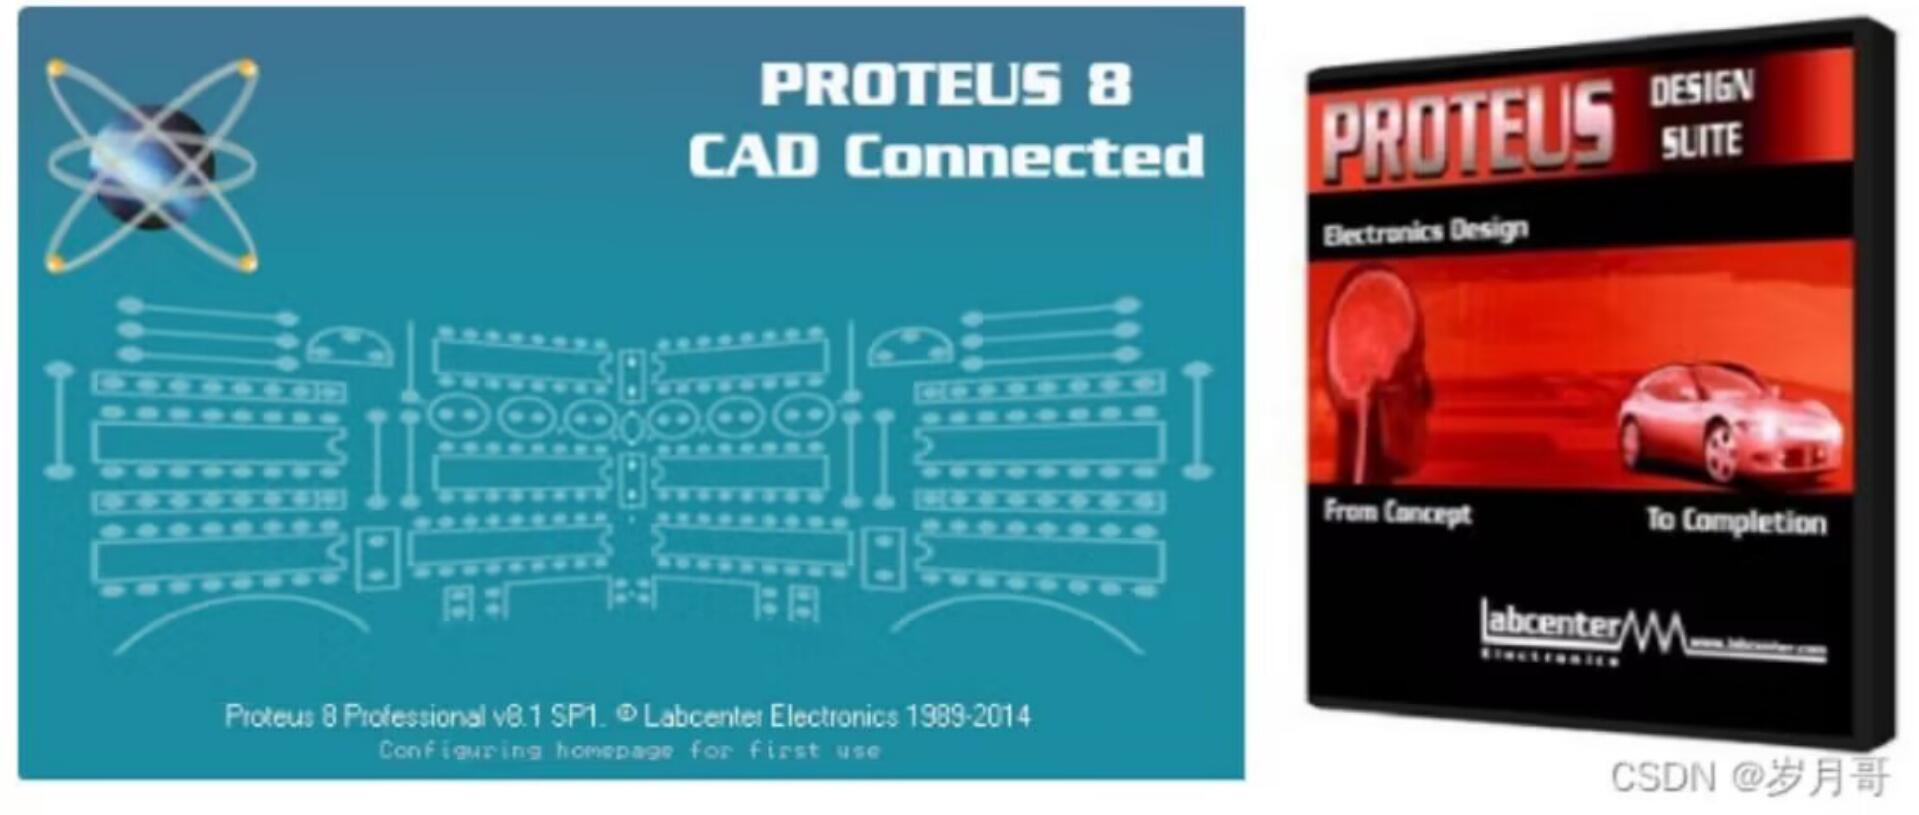 Proteus v8.9 sp2 一款功能强大的 PCB 设计软件